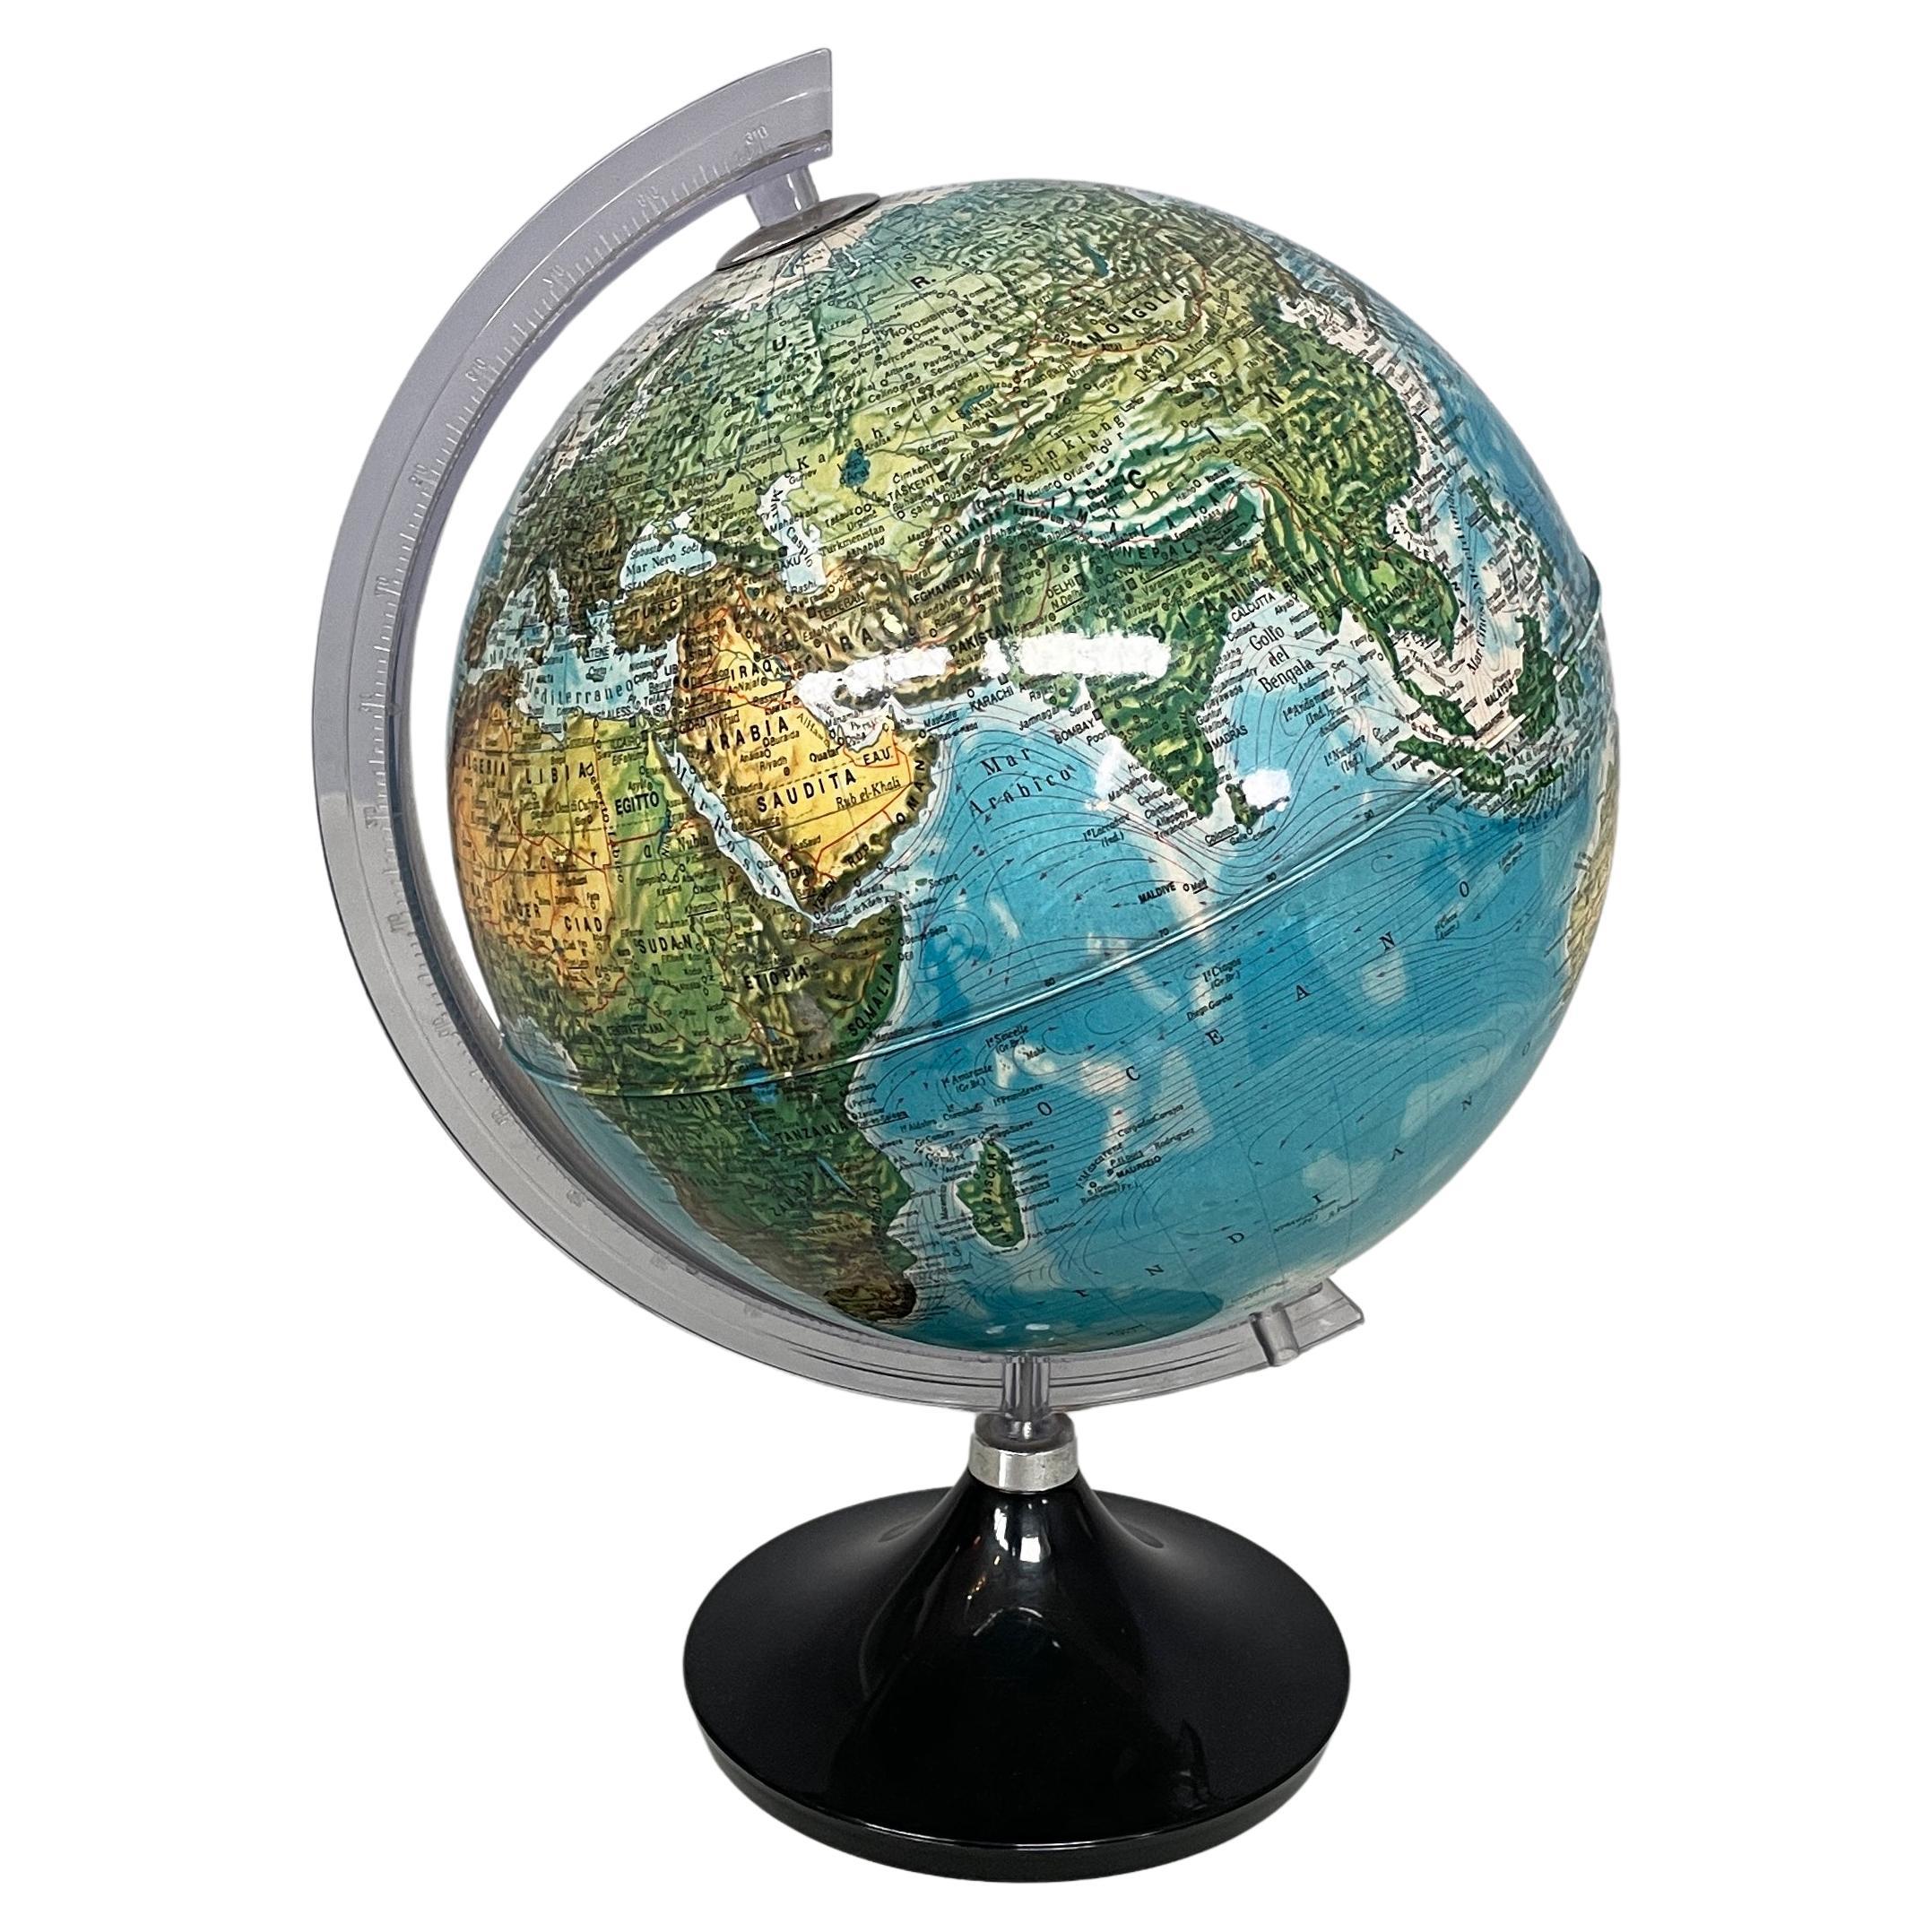 Italian modern Plastic table globe by Tecnodidattica, 2000s